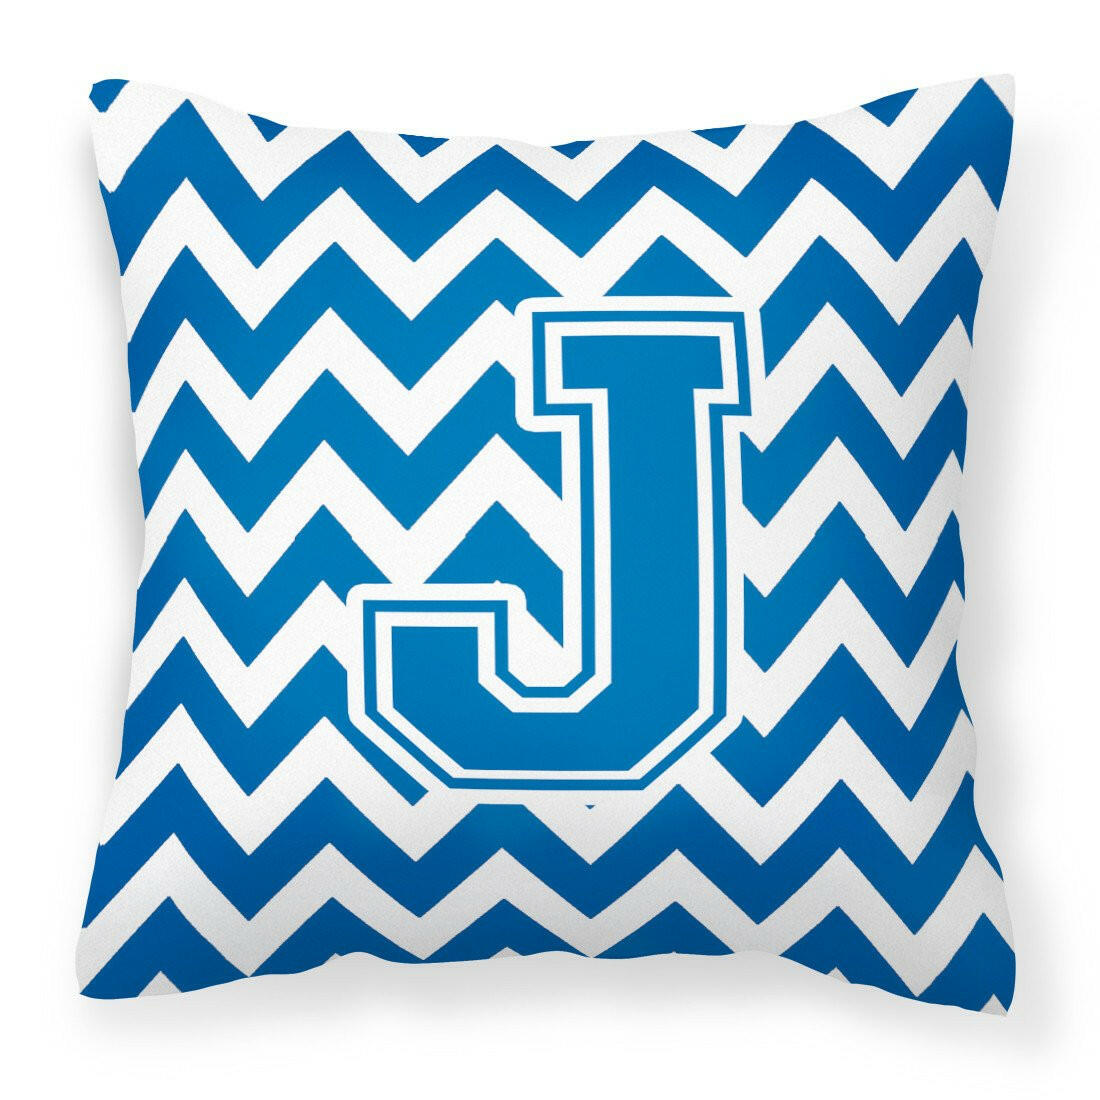 Letter J Chevron Blue and White Fabric Decorative Pillow CJ1056-JPW1414 by Caroline's Treasures